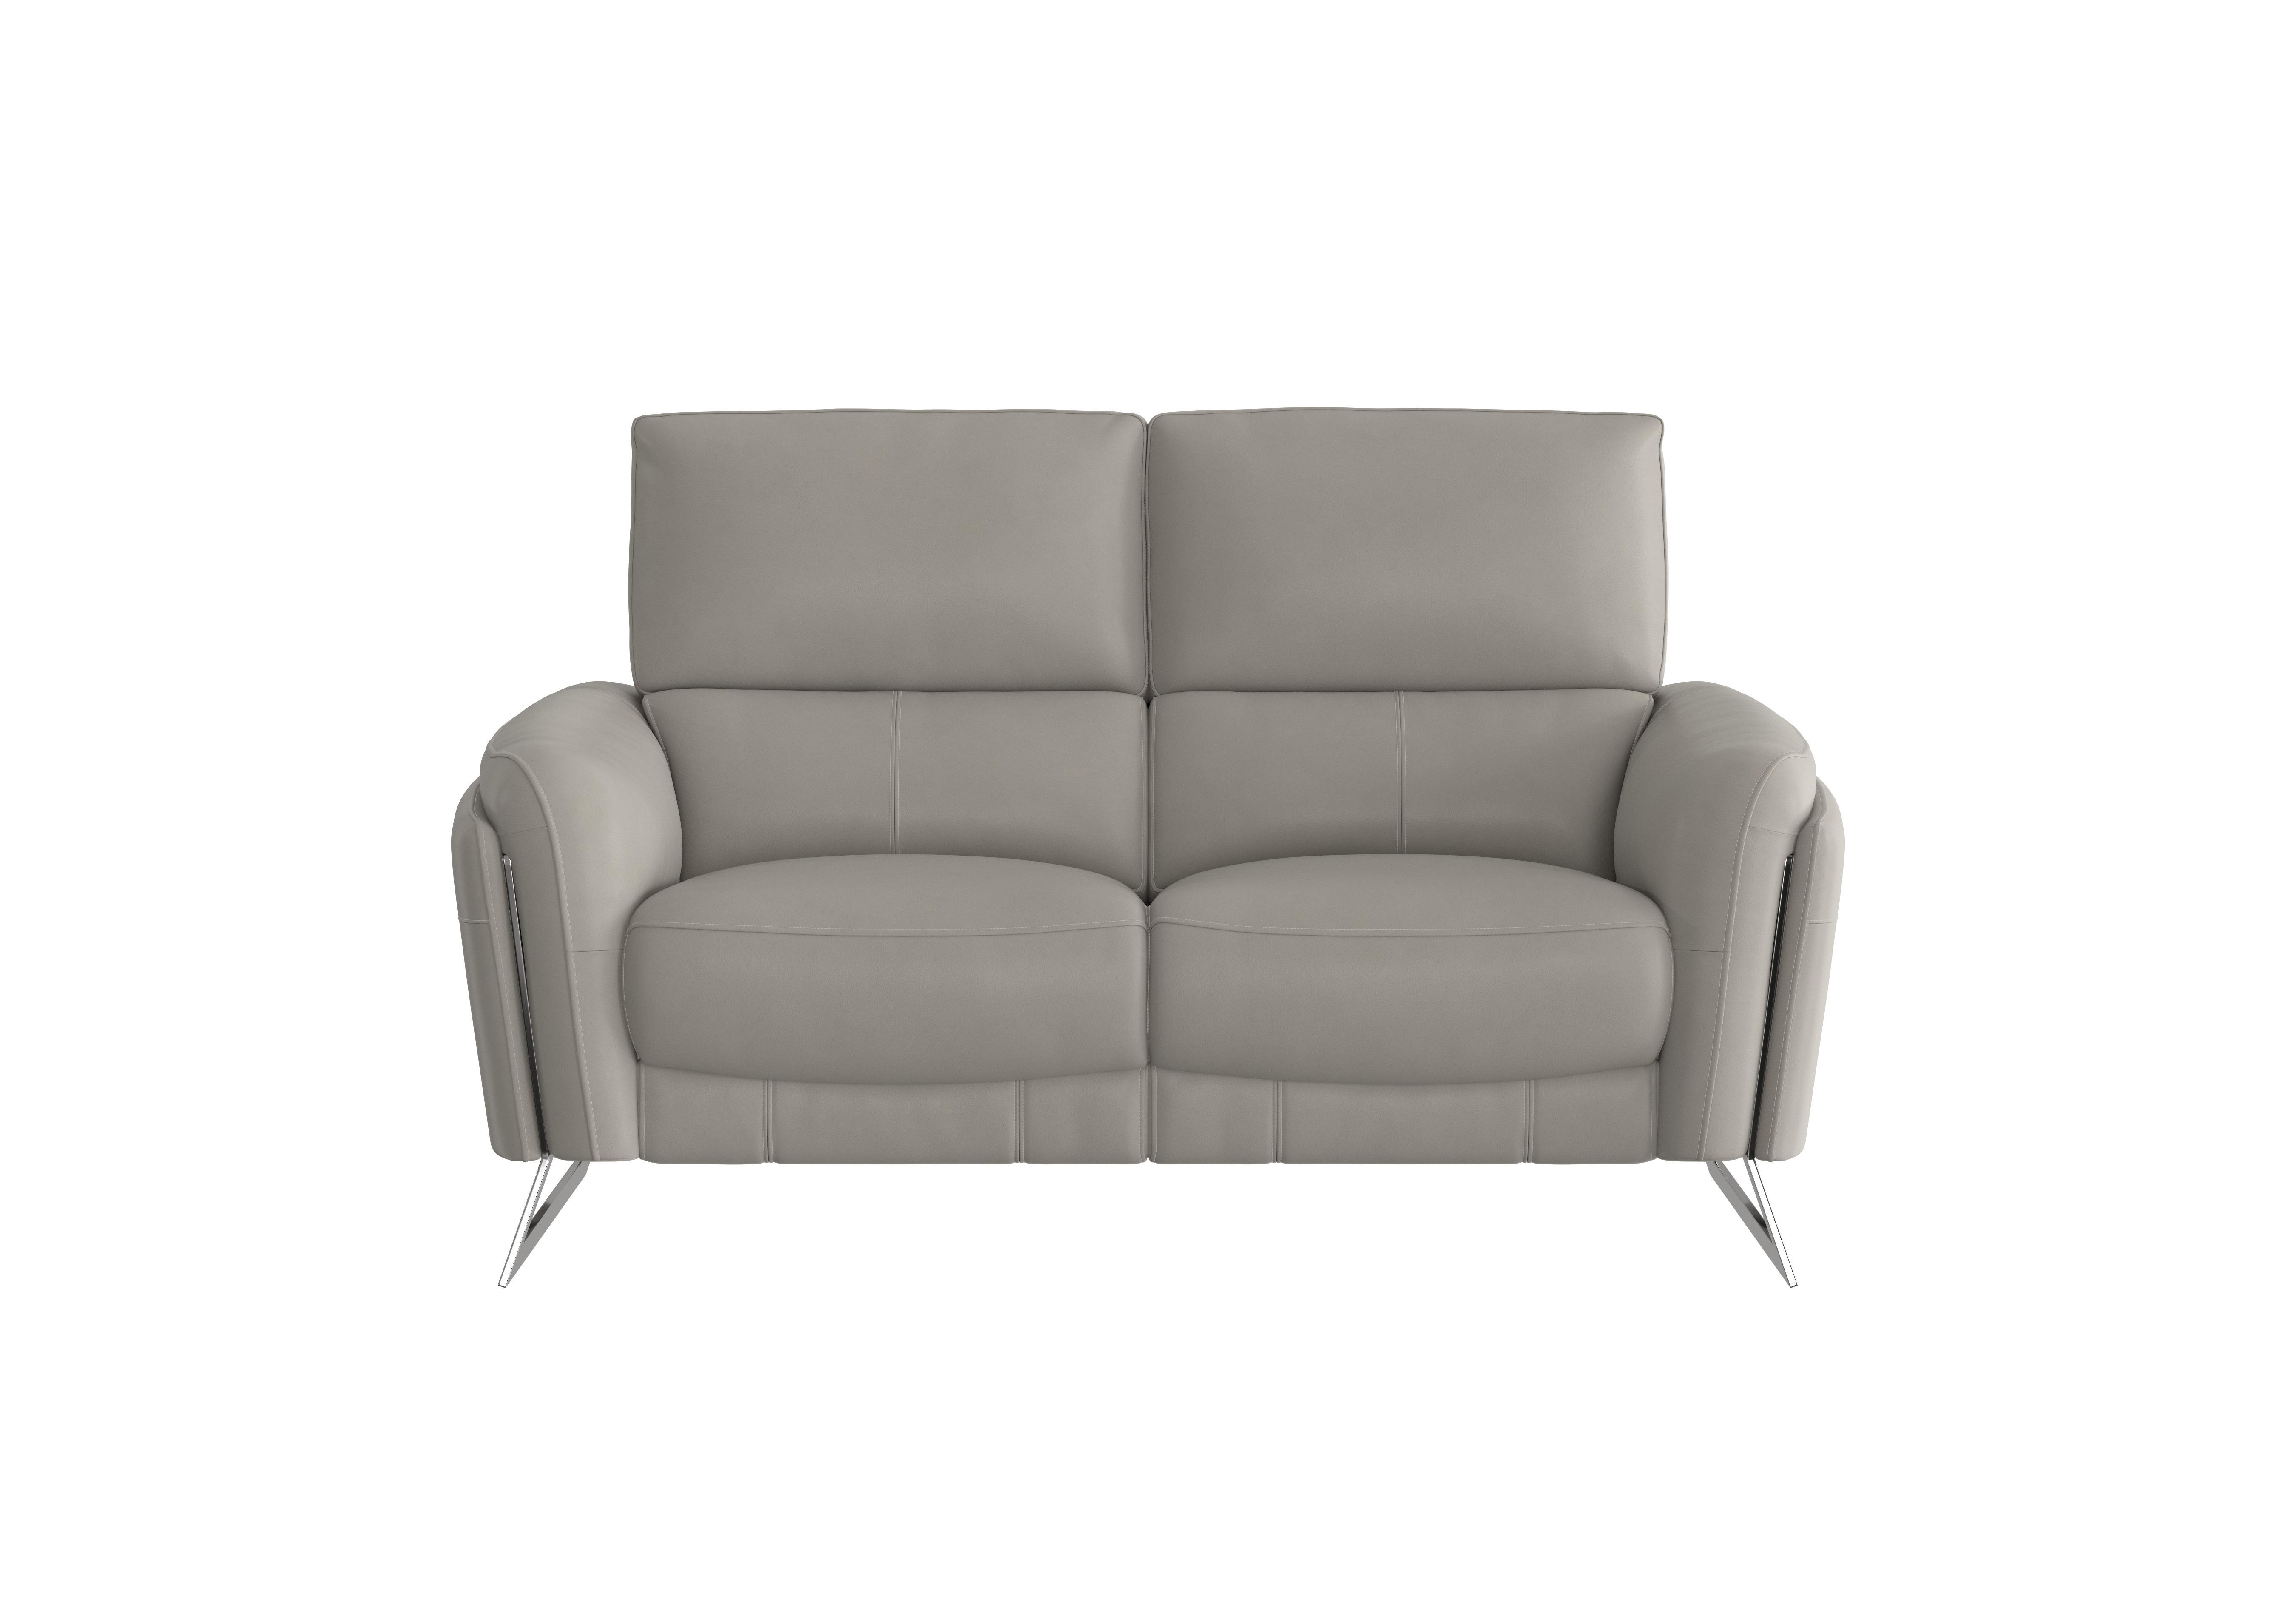 Amarilla 2 Seater Leather Sofa in Bv-946b Silver Grey on Furniture Village